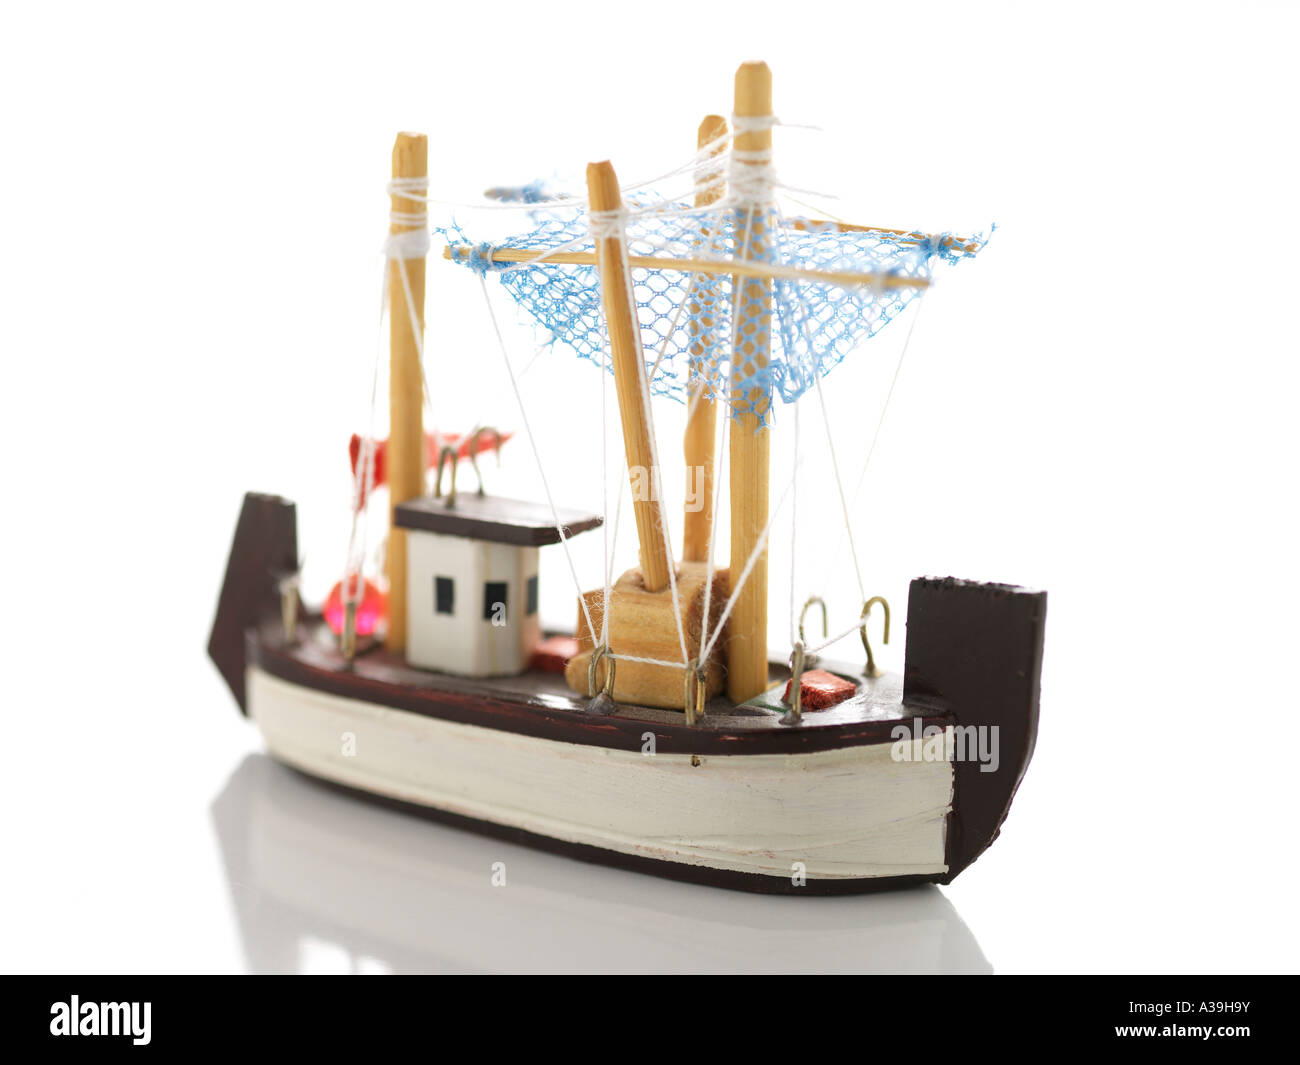 model, ship, ornament, wood, handicraft, souvenir, small, toy